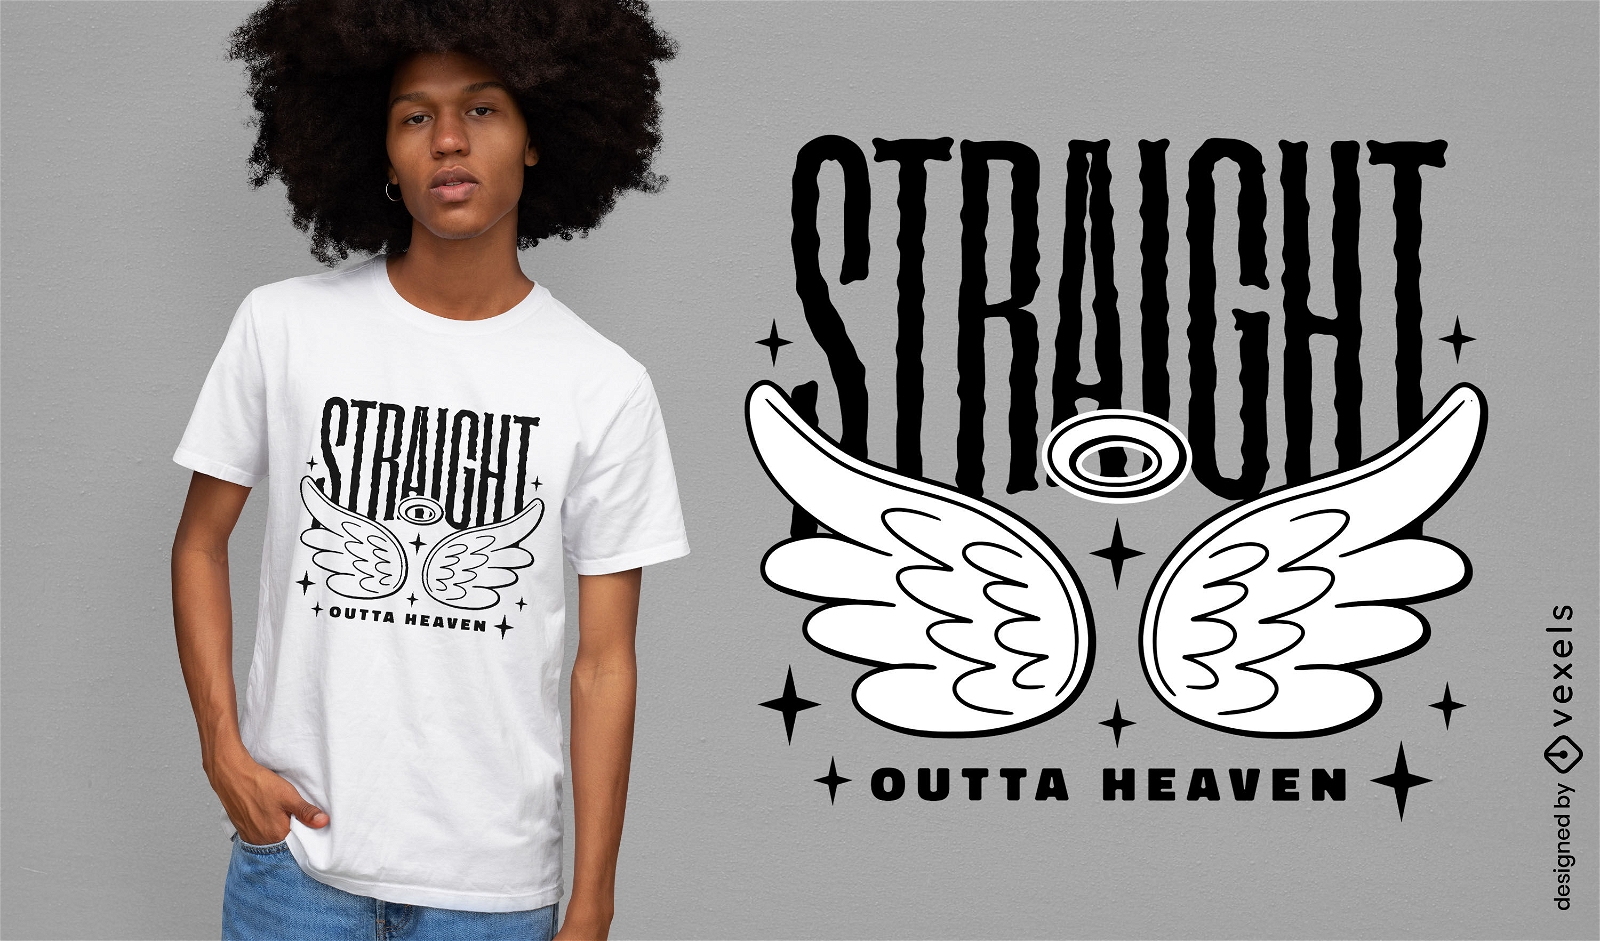 Straight outta heaven t-shirt design